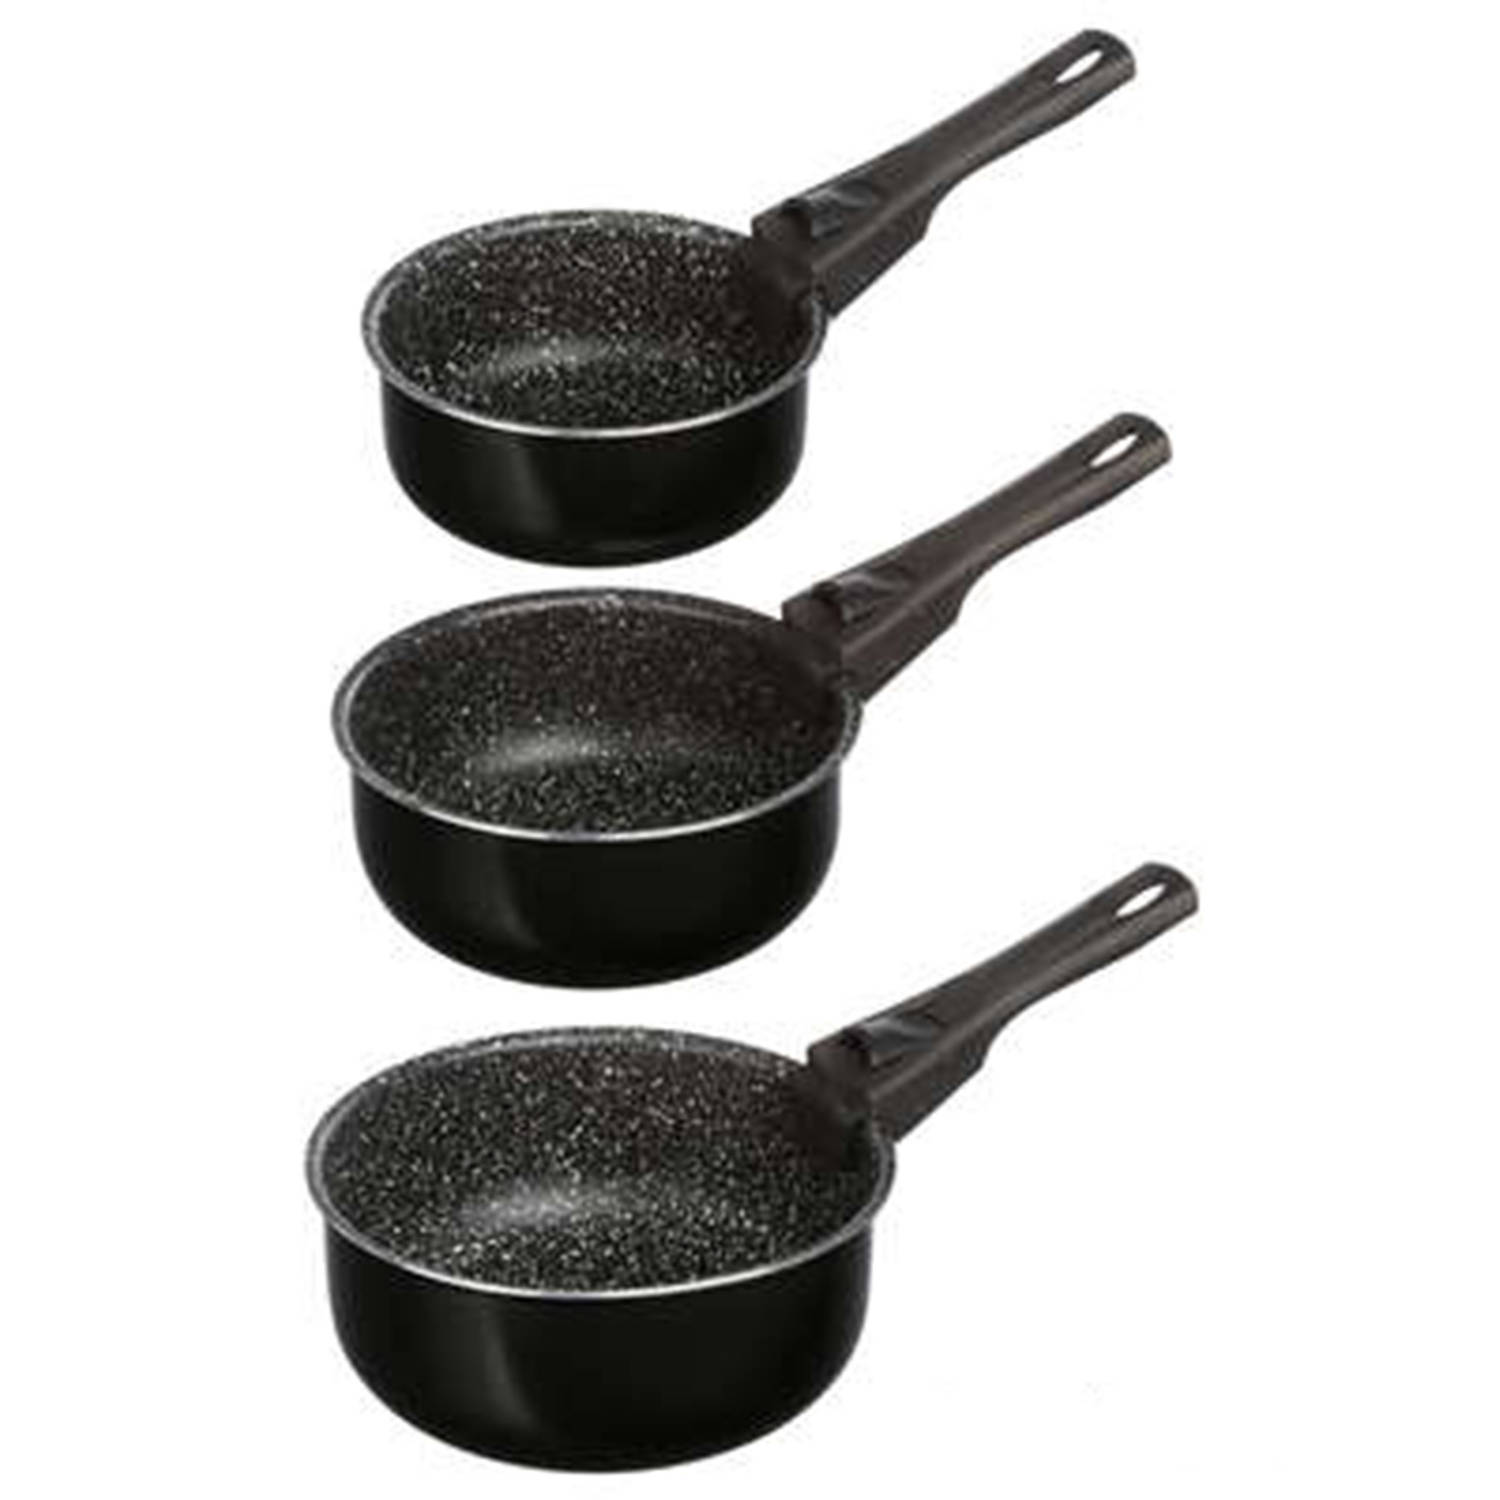 Steelpan-sauspan 3x stuks voor alle kookplaten aluminium zwart 17-19-21 cm Steelpannen